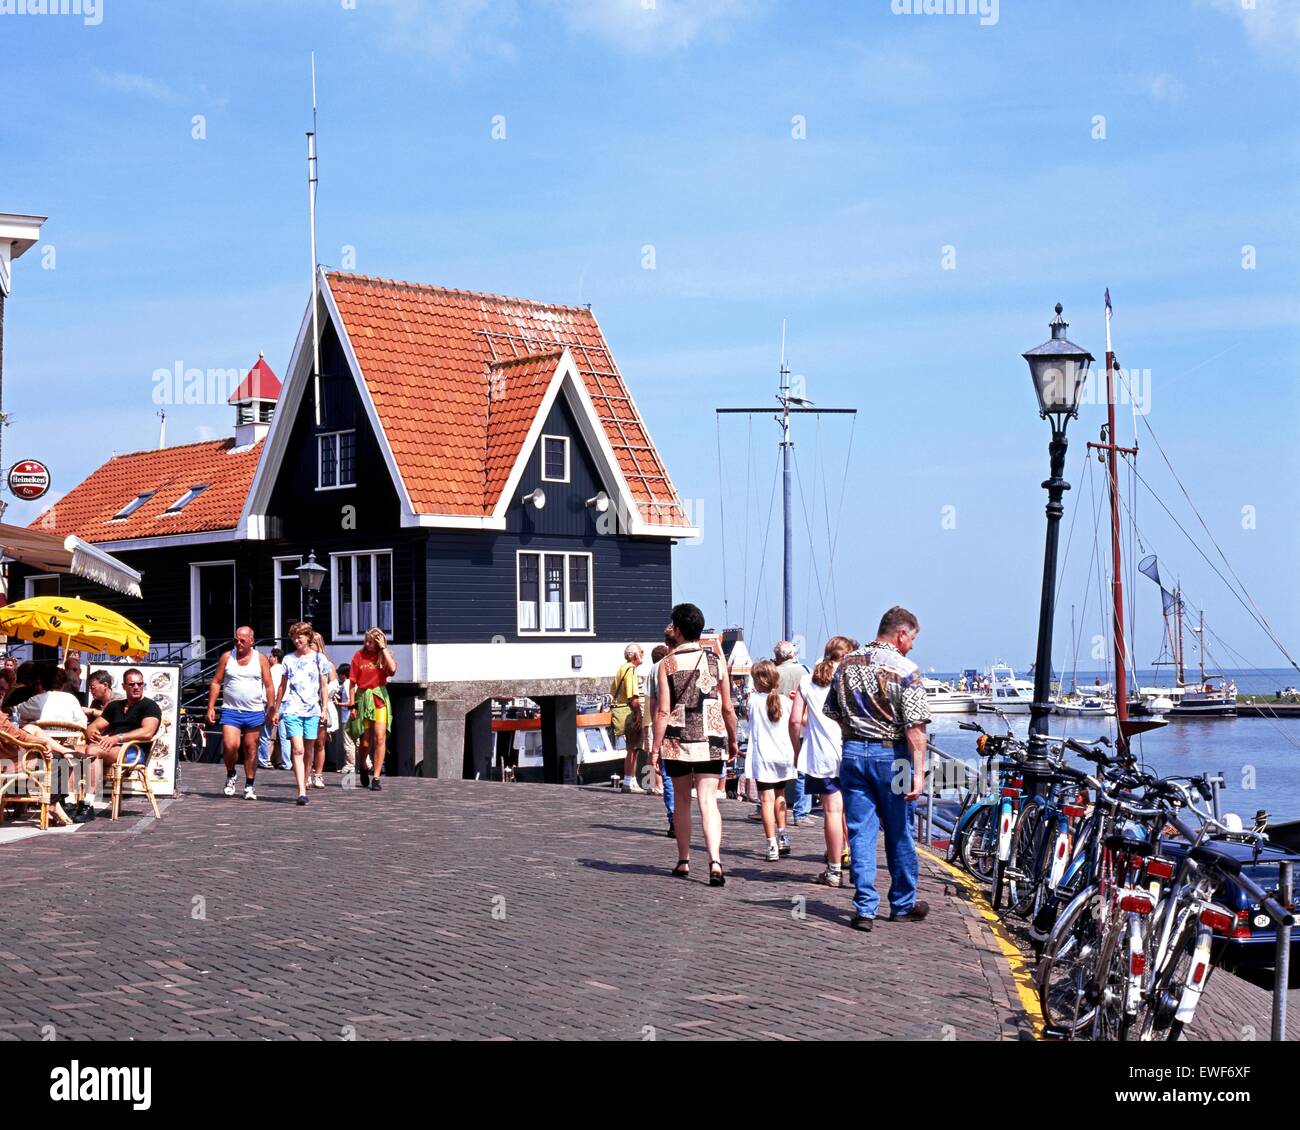 Tourists walking along the quayside street, Volendam, Holland, Netherlands, Europe. Stock Photo